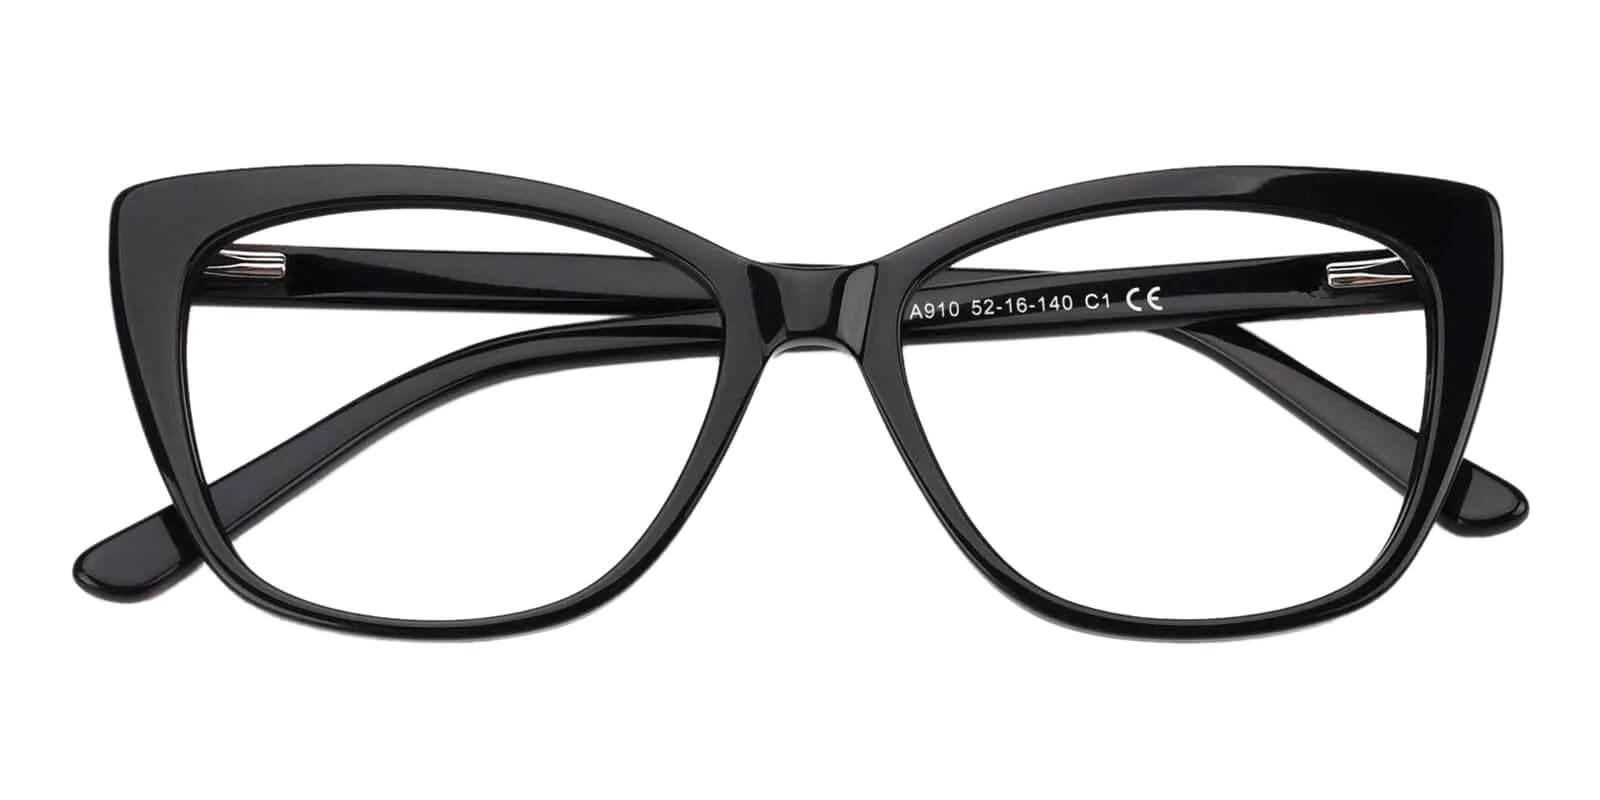 Truda Black Acetate Eyeglasses , Fashion , SpringHinges , UniversalBridgeFit Frames from ABBE Glasses